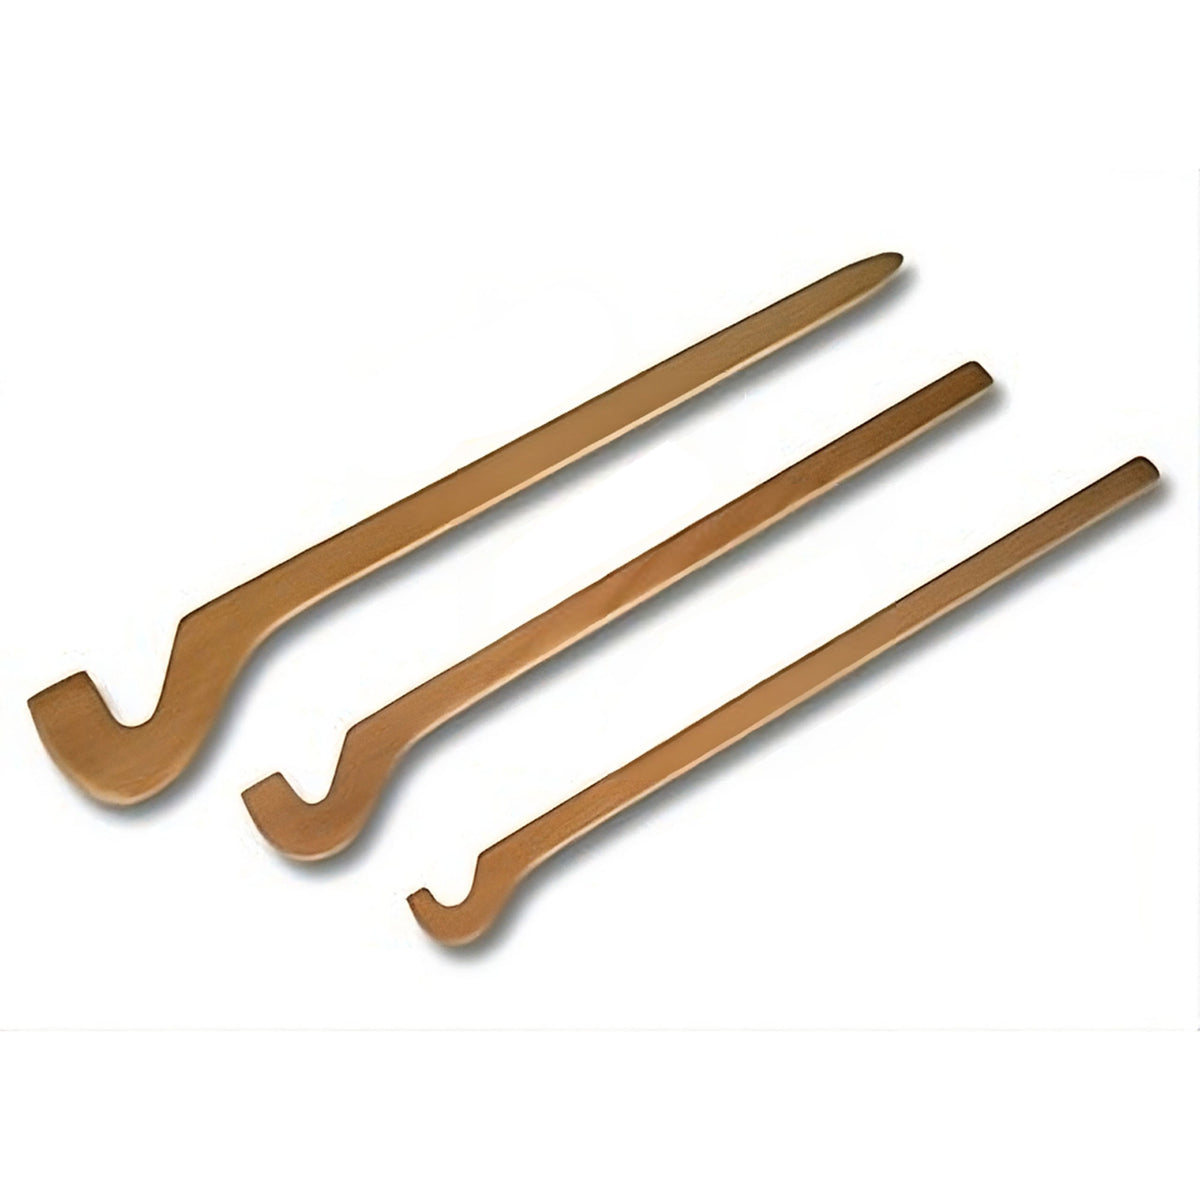 Shimpo/Nidec 'Kigote' (Hari gata) Throwing Sticks